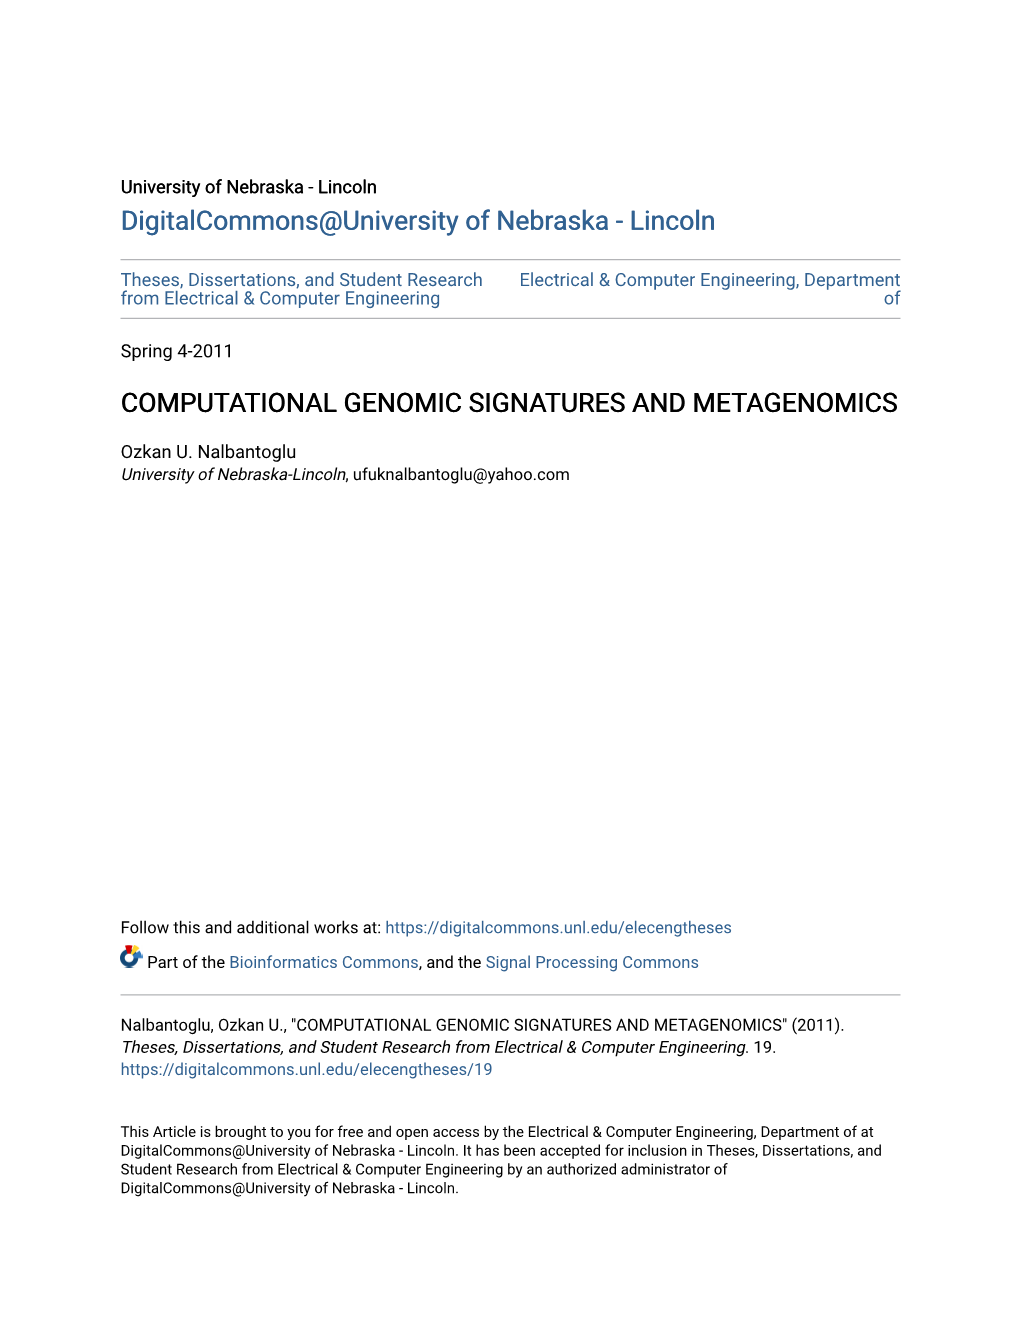 Computational Genomic Signatures and Metagenomics